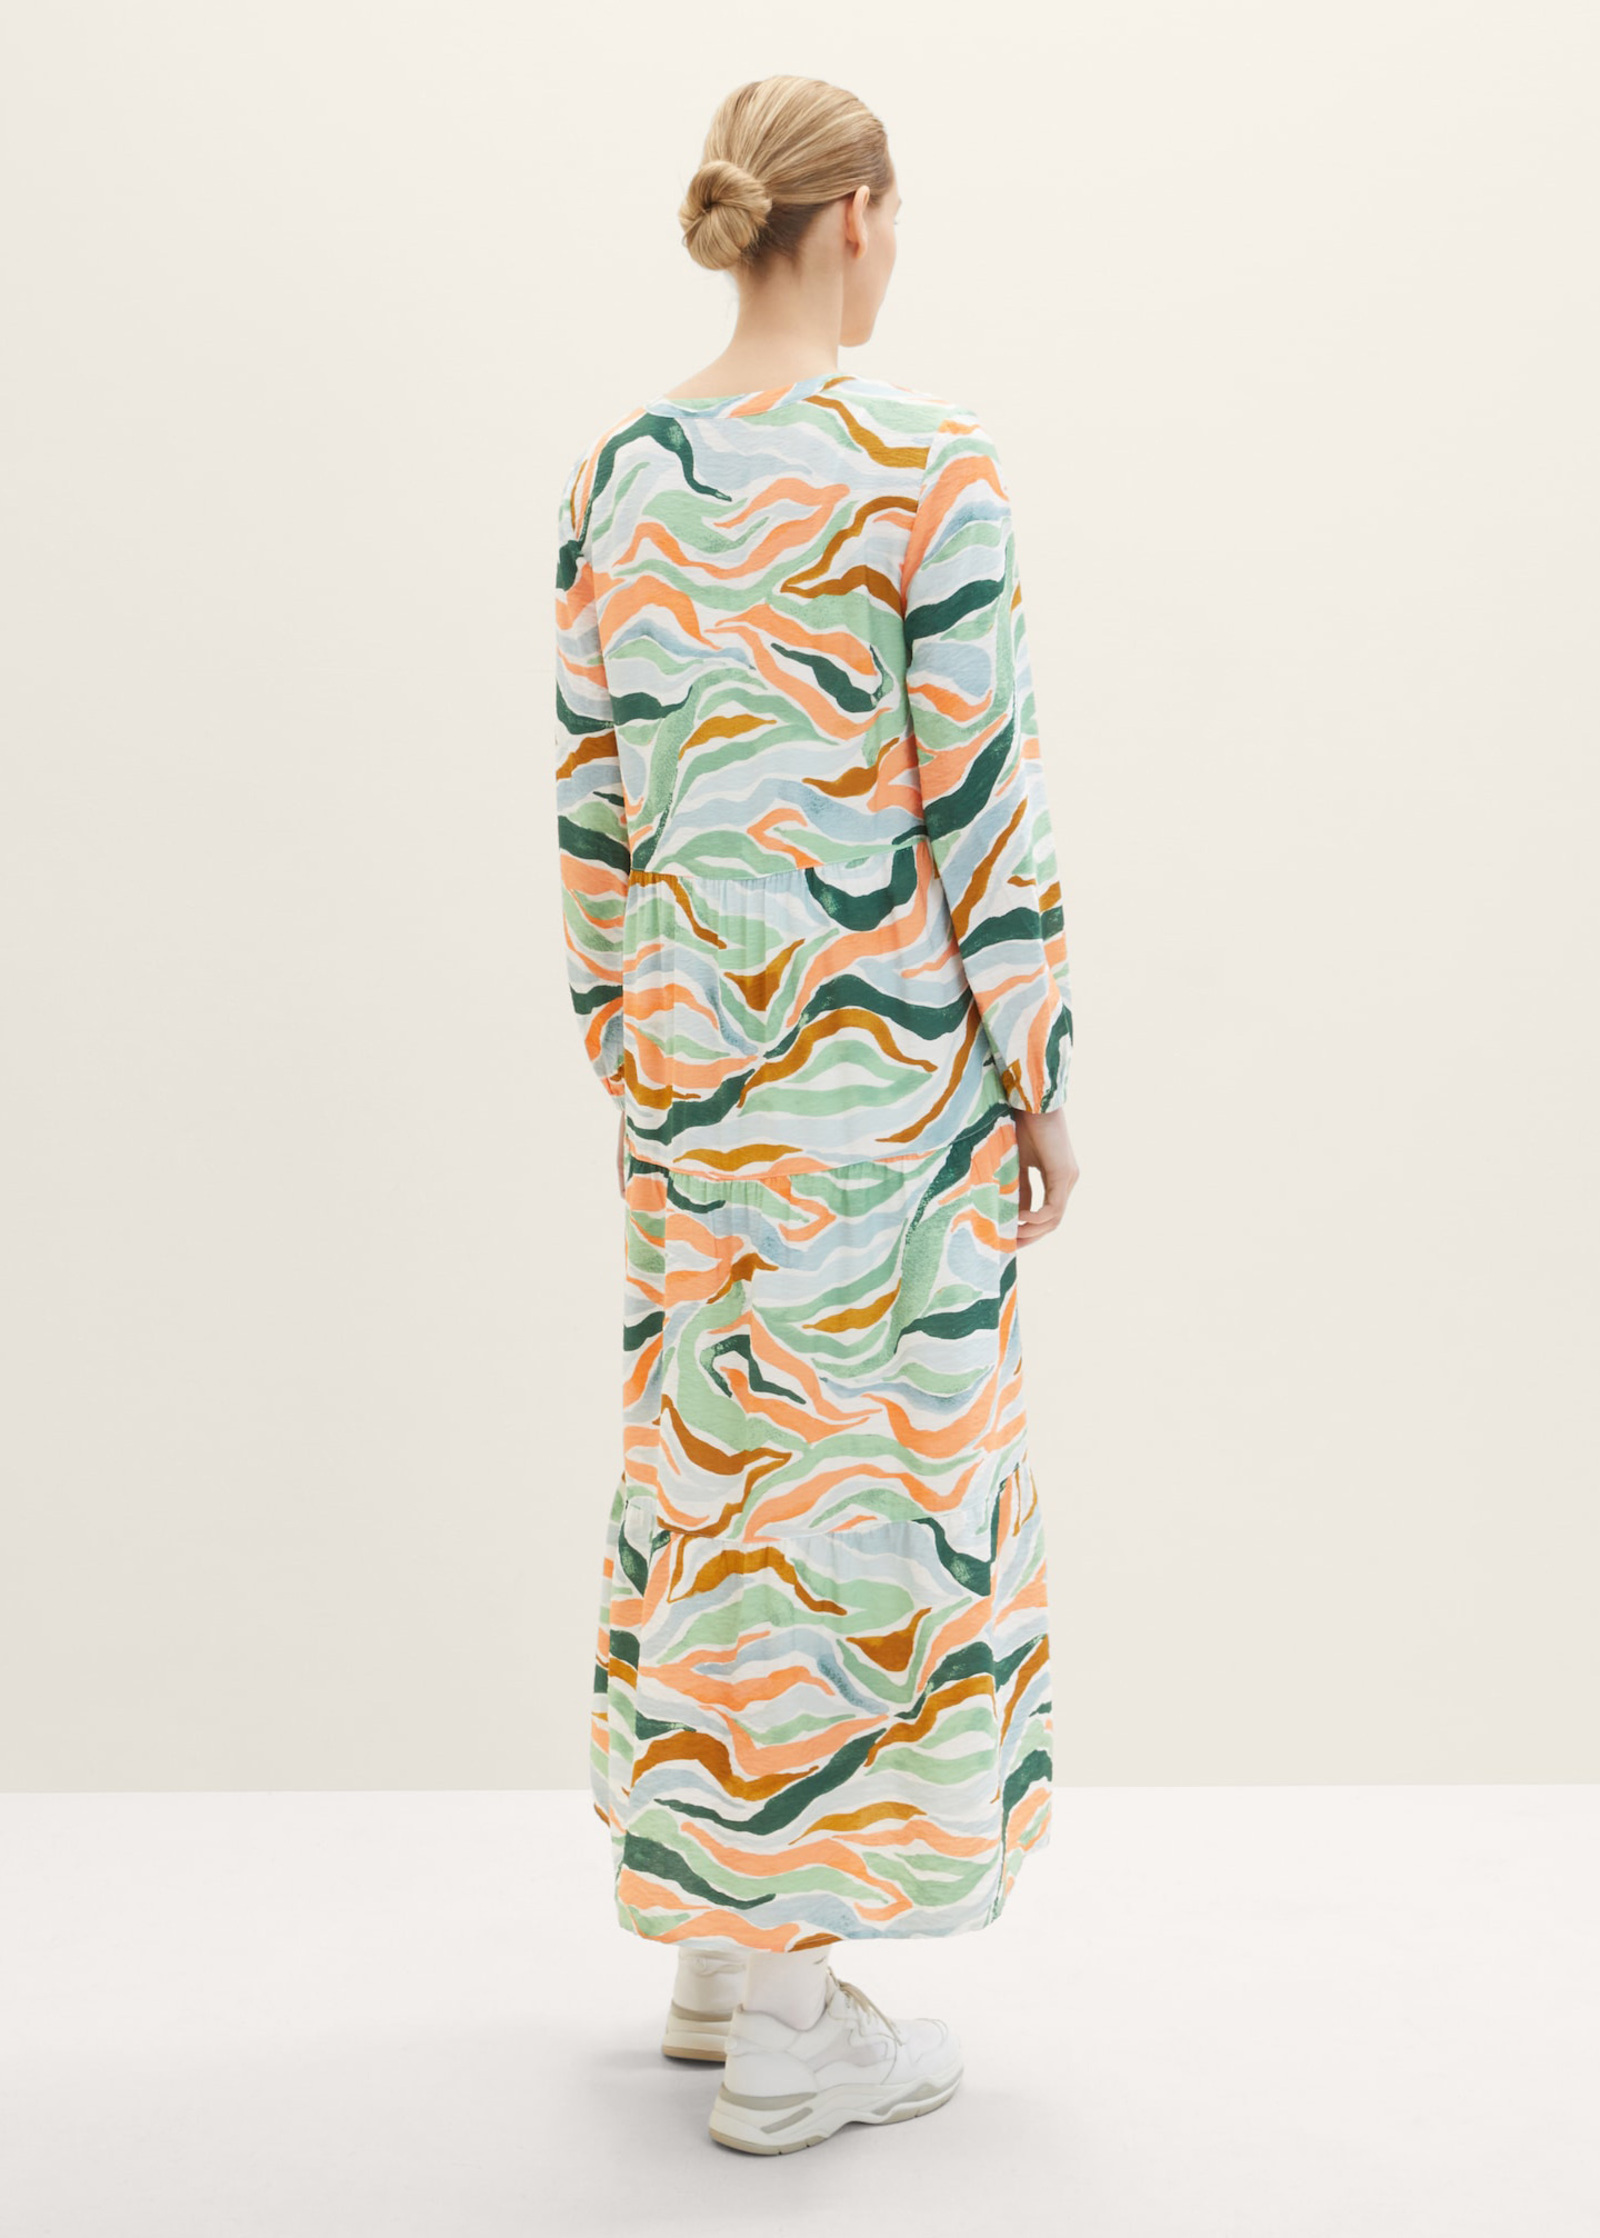 Tom Tailor® Dress Size Design Wavy - 38 Colorful